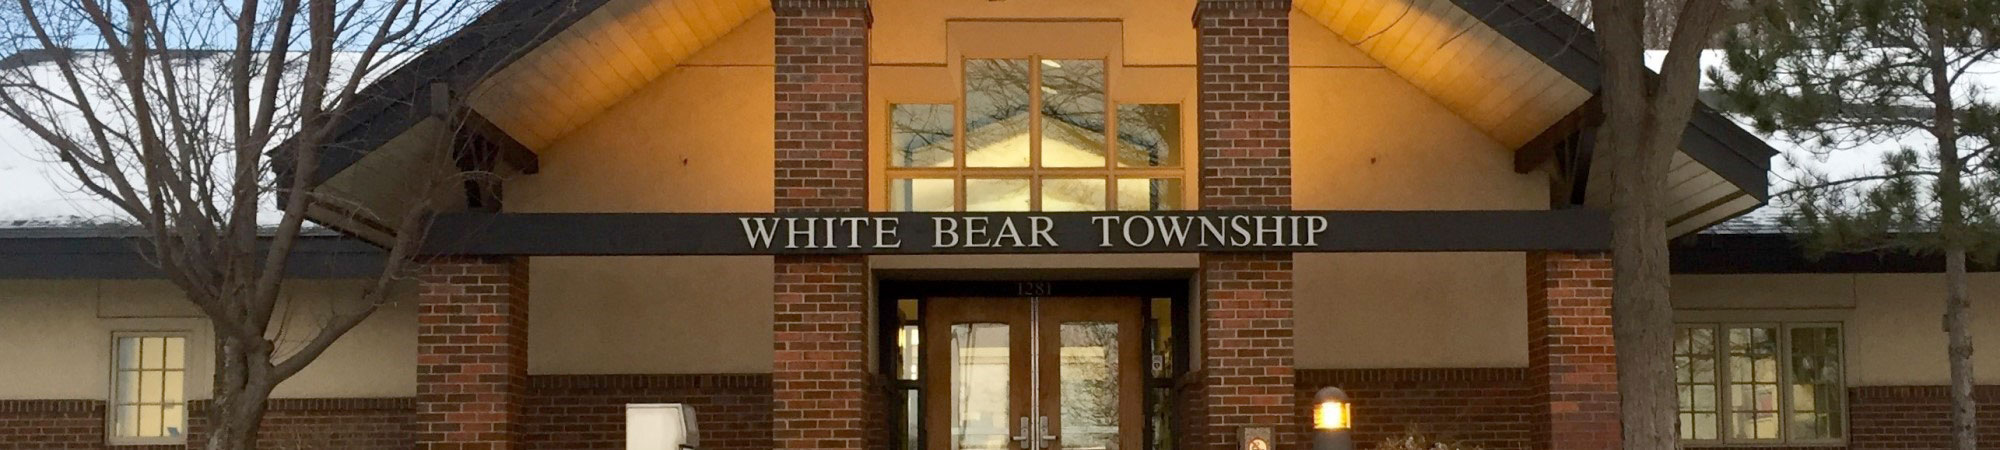 White Bear Township building